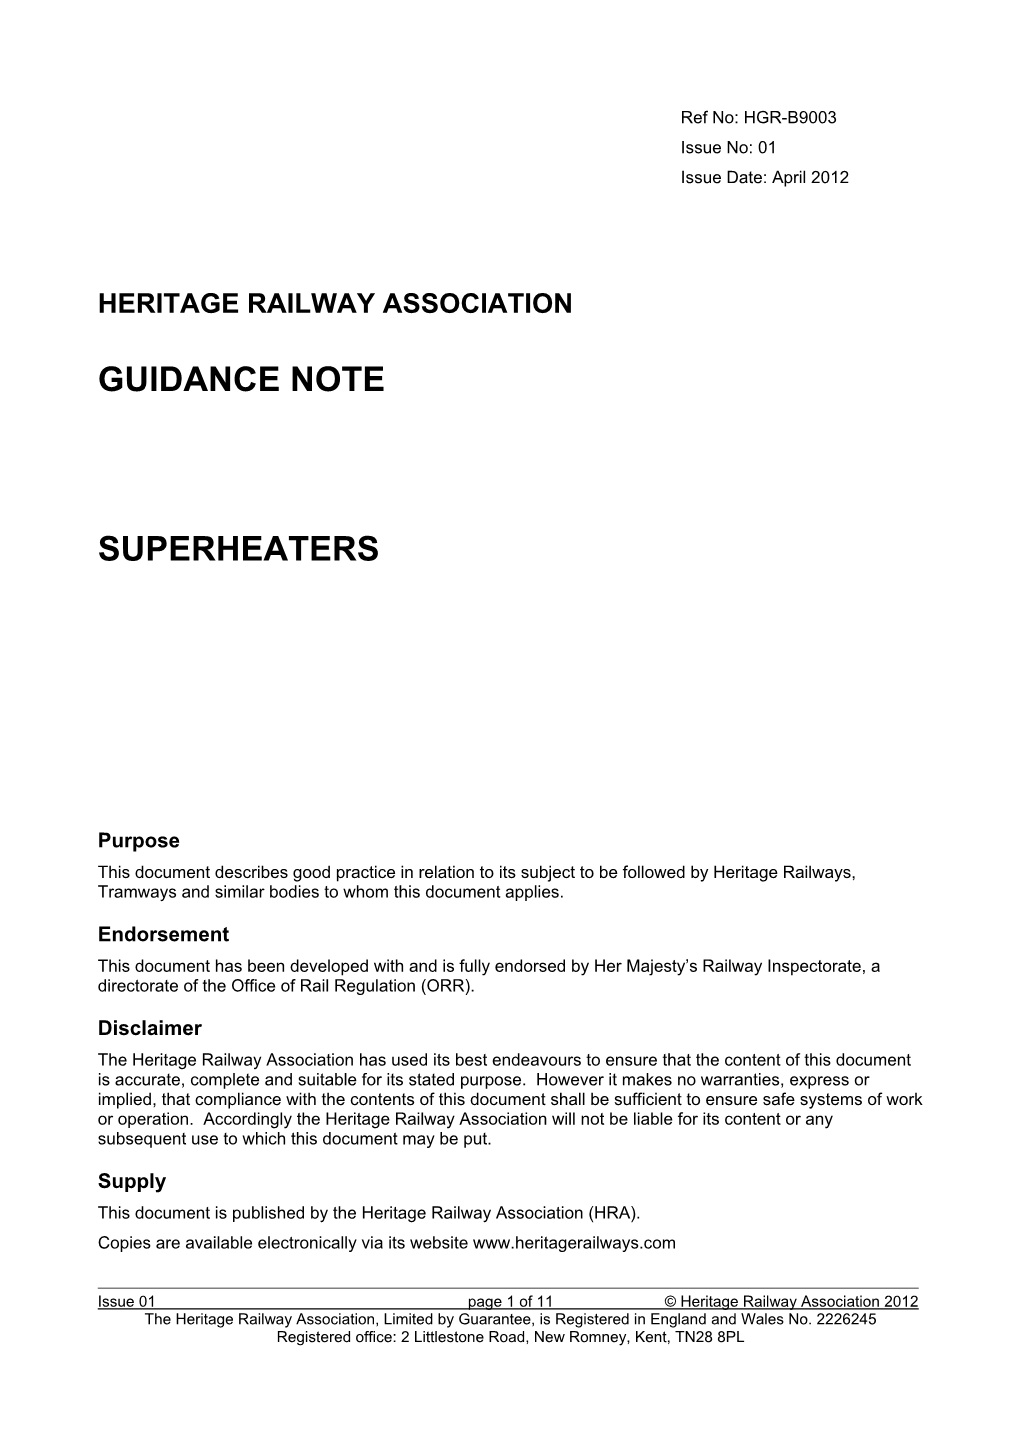 Heritage Railway Association